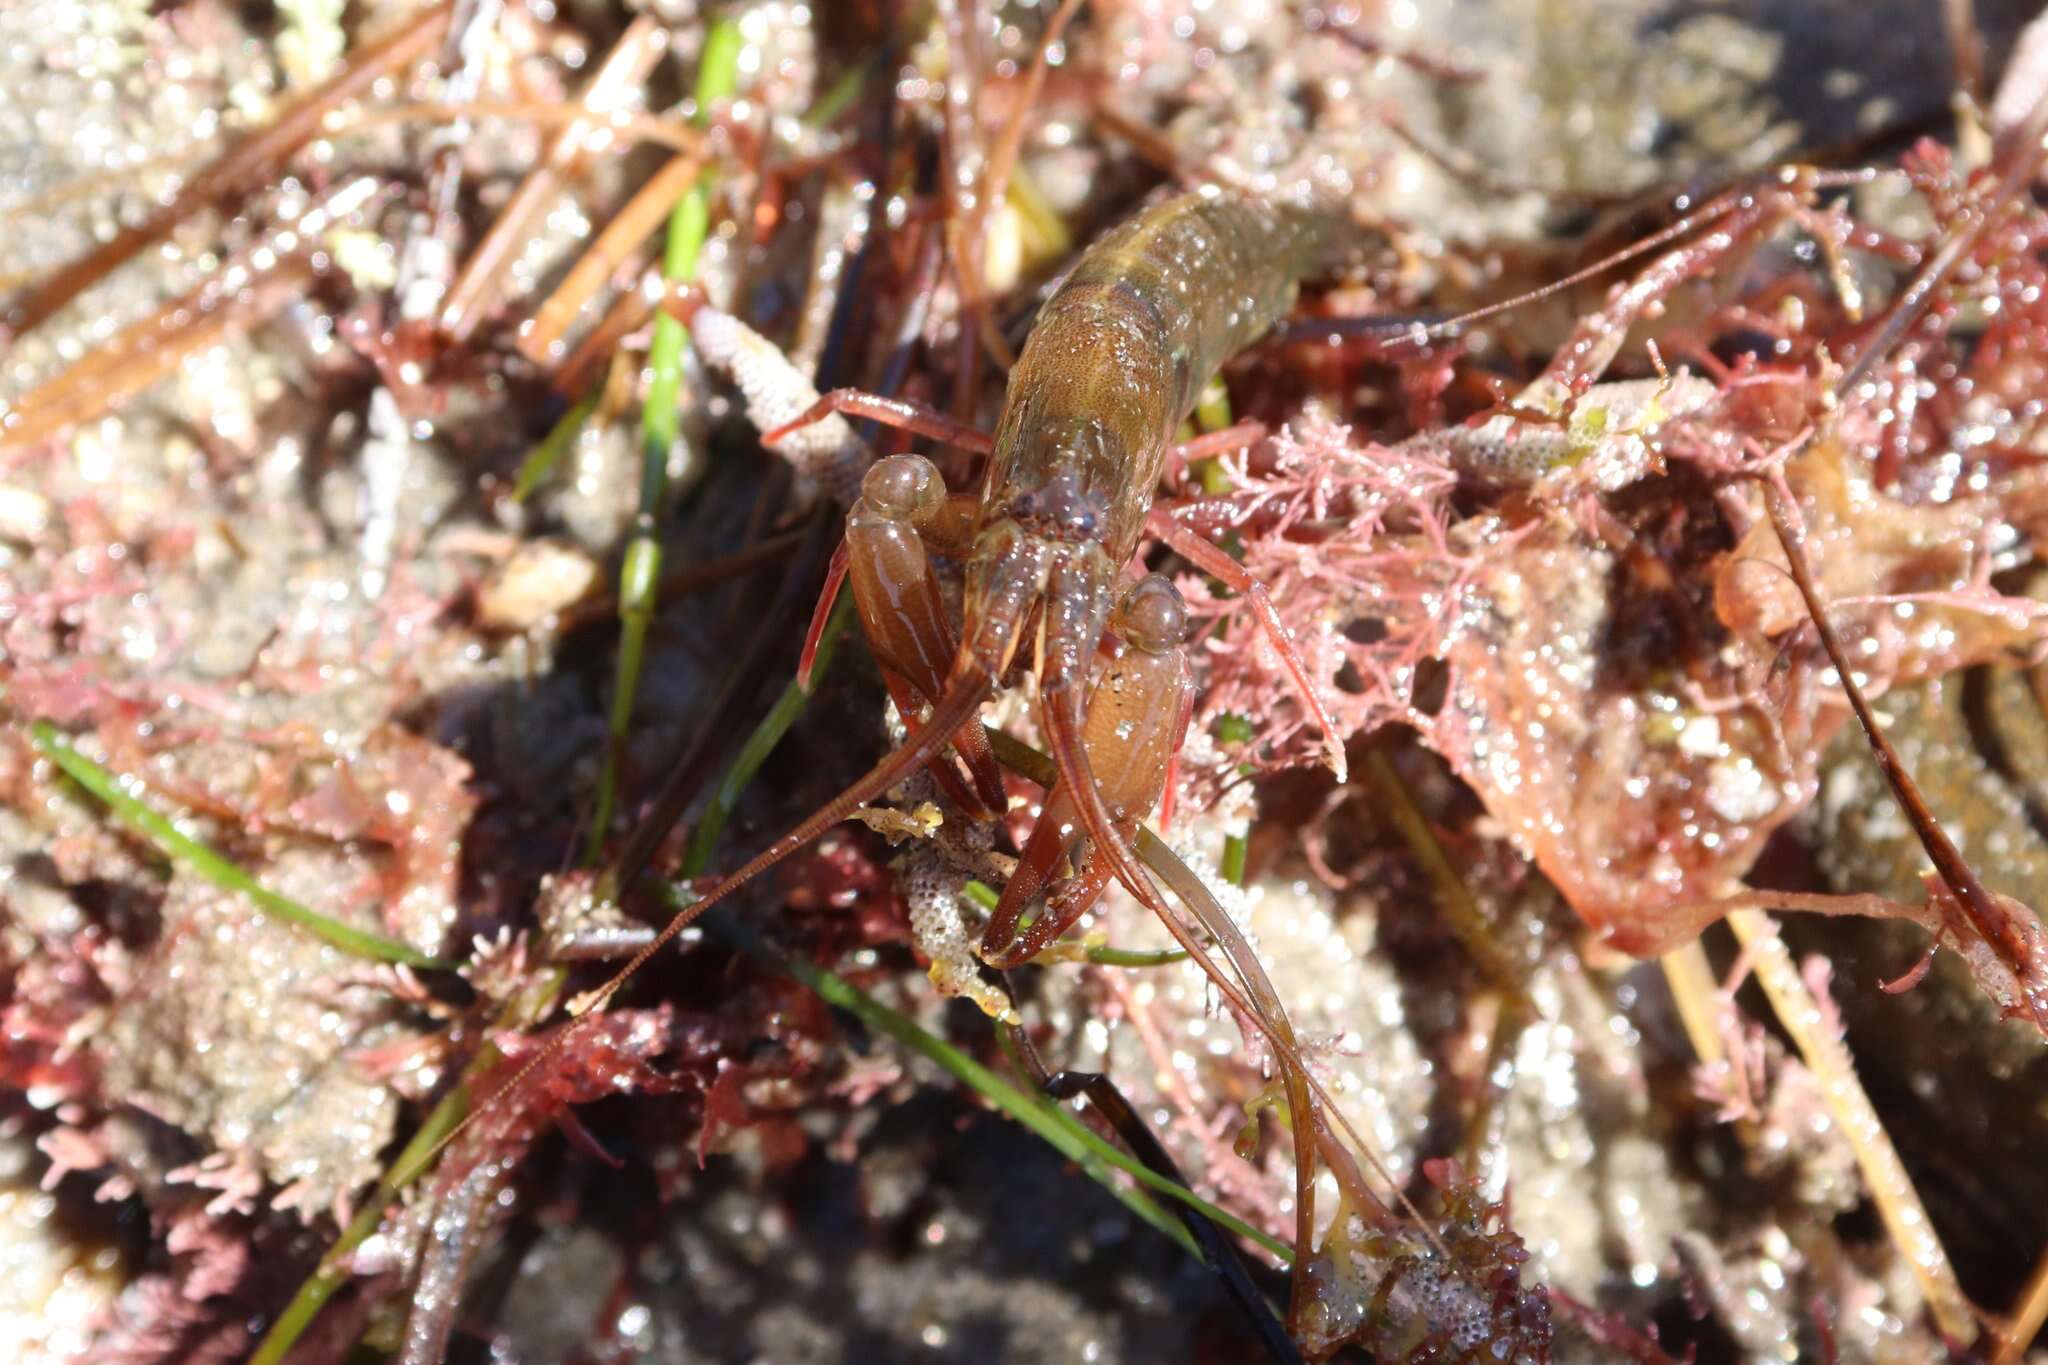 Image of visored shrimp